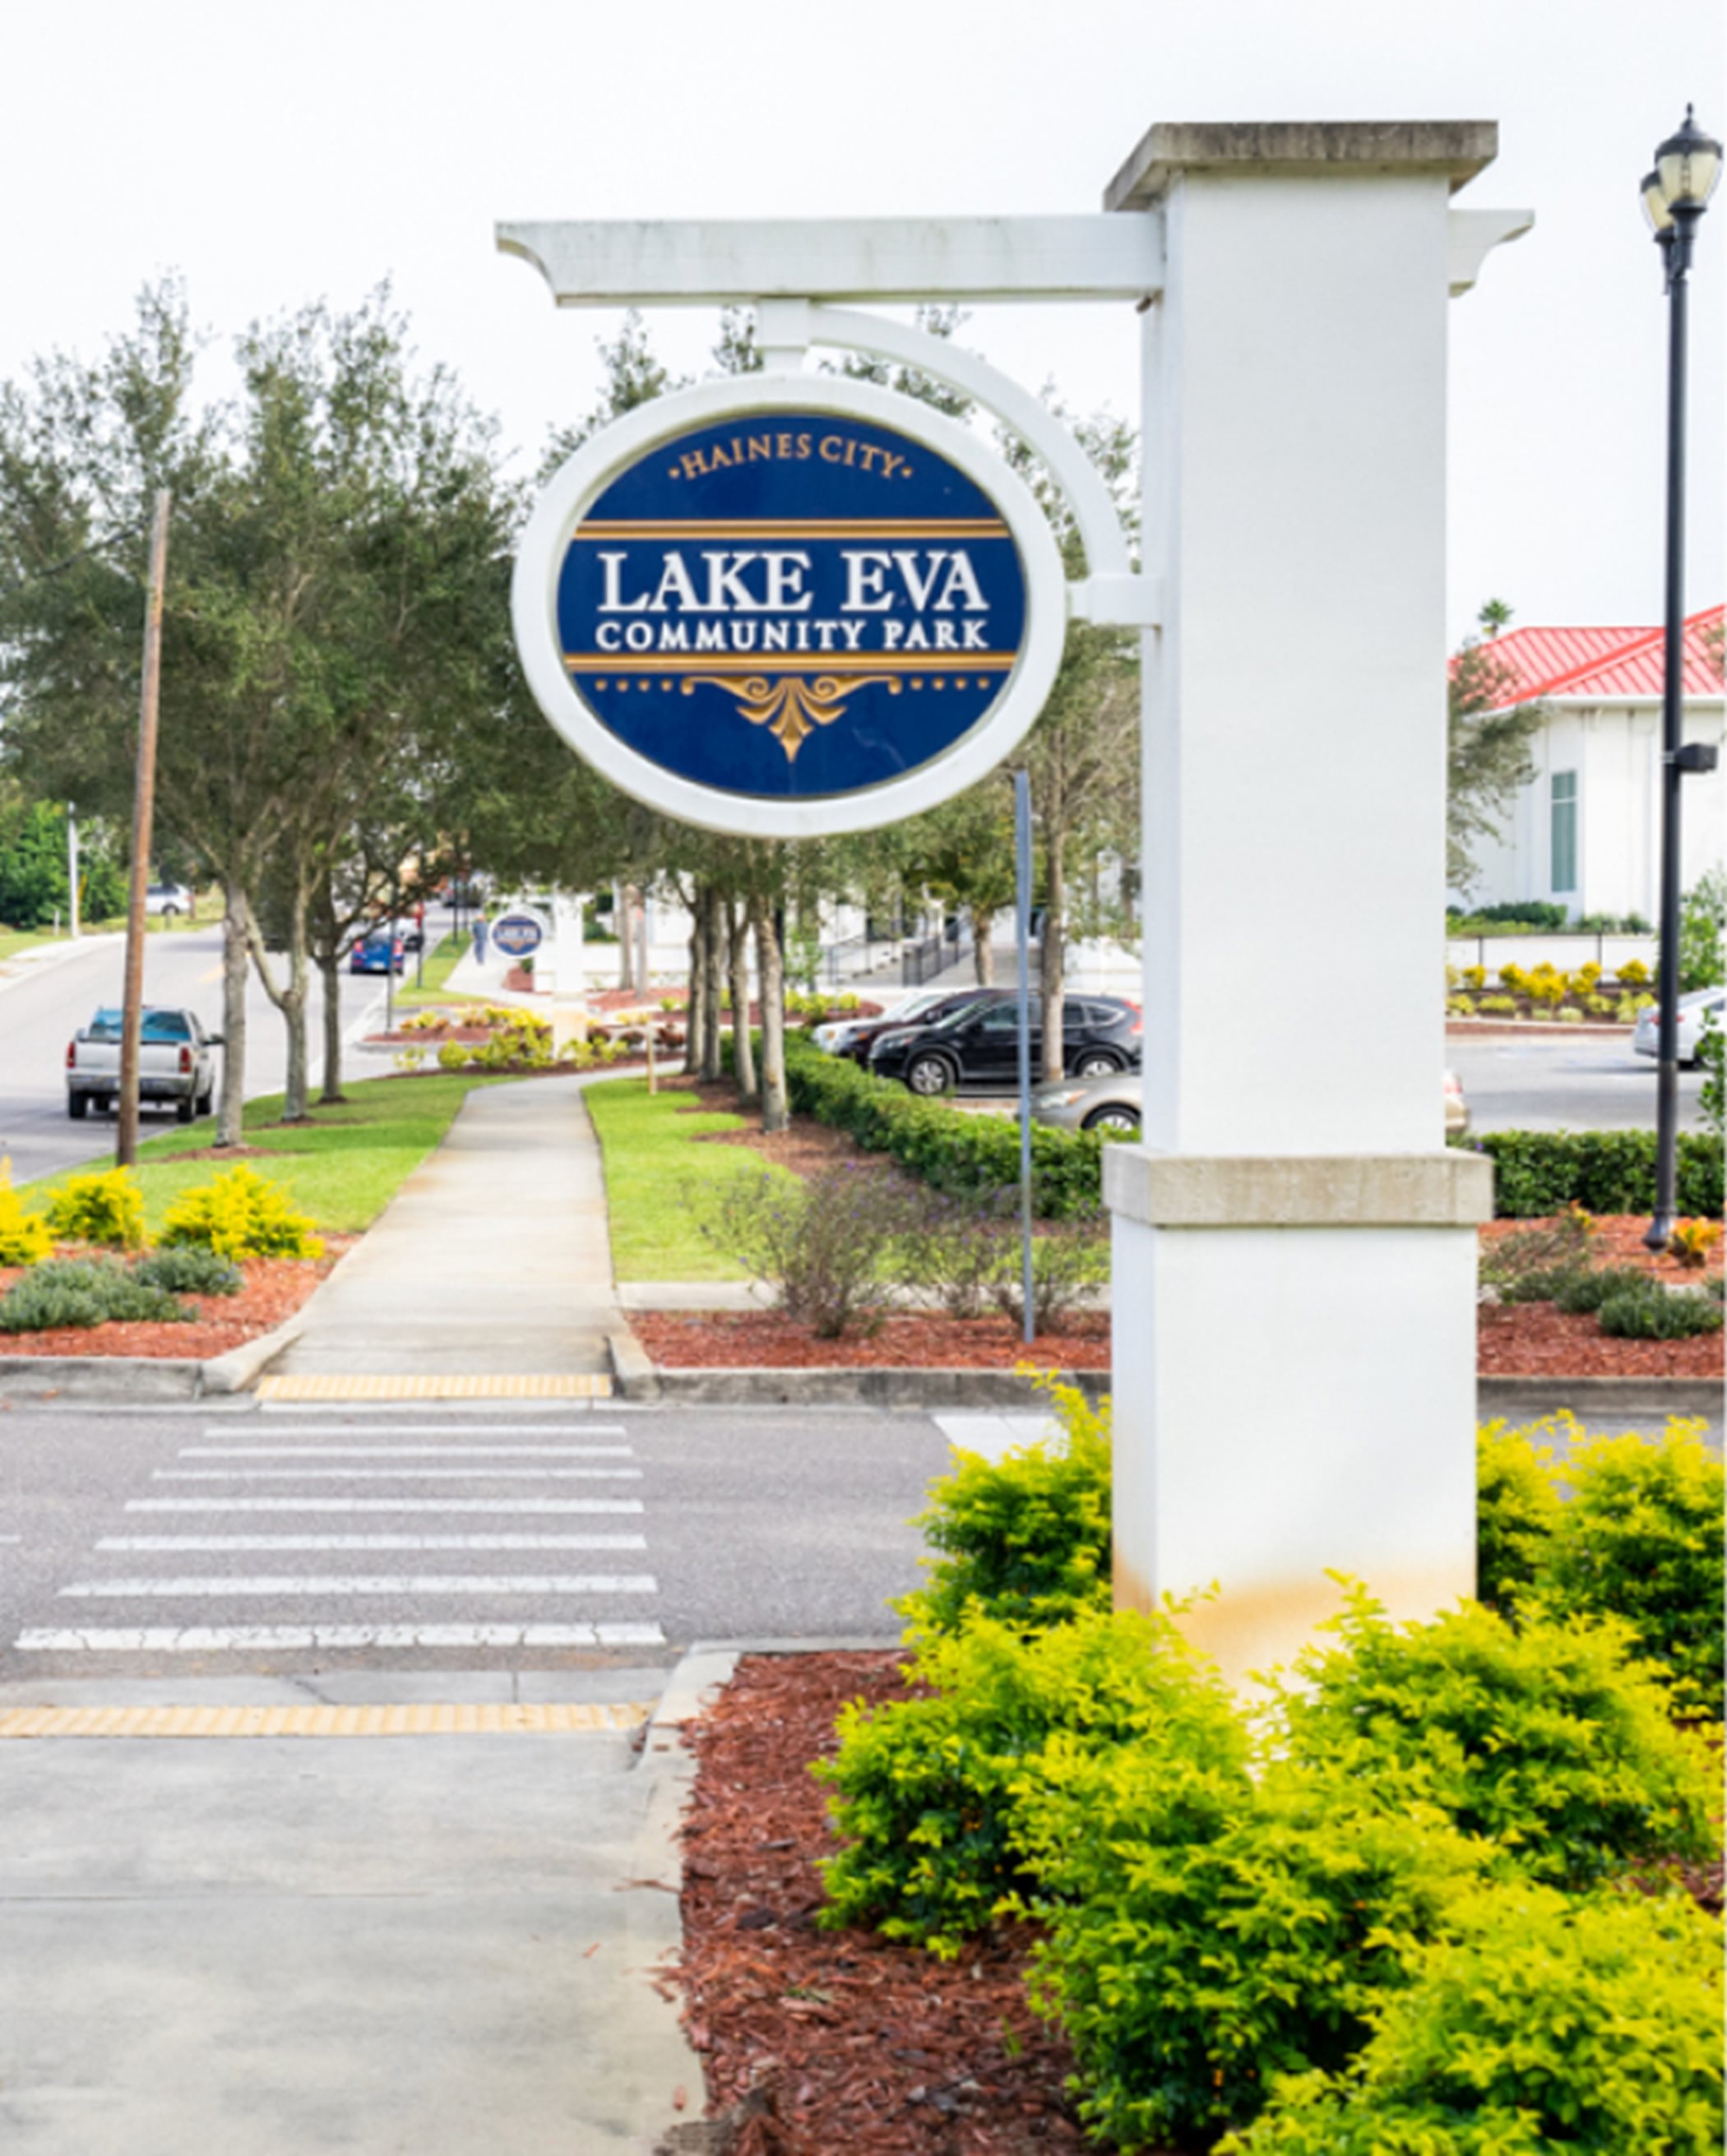 Lake Eva Community Park sign